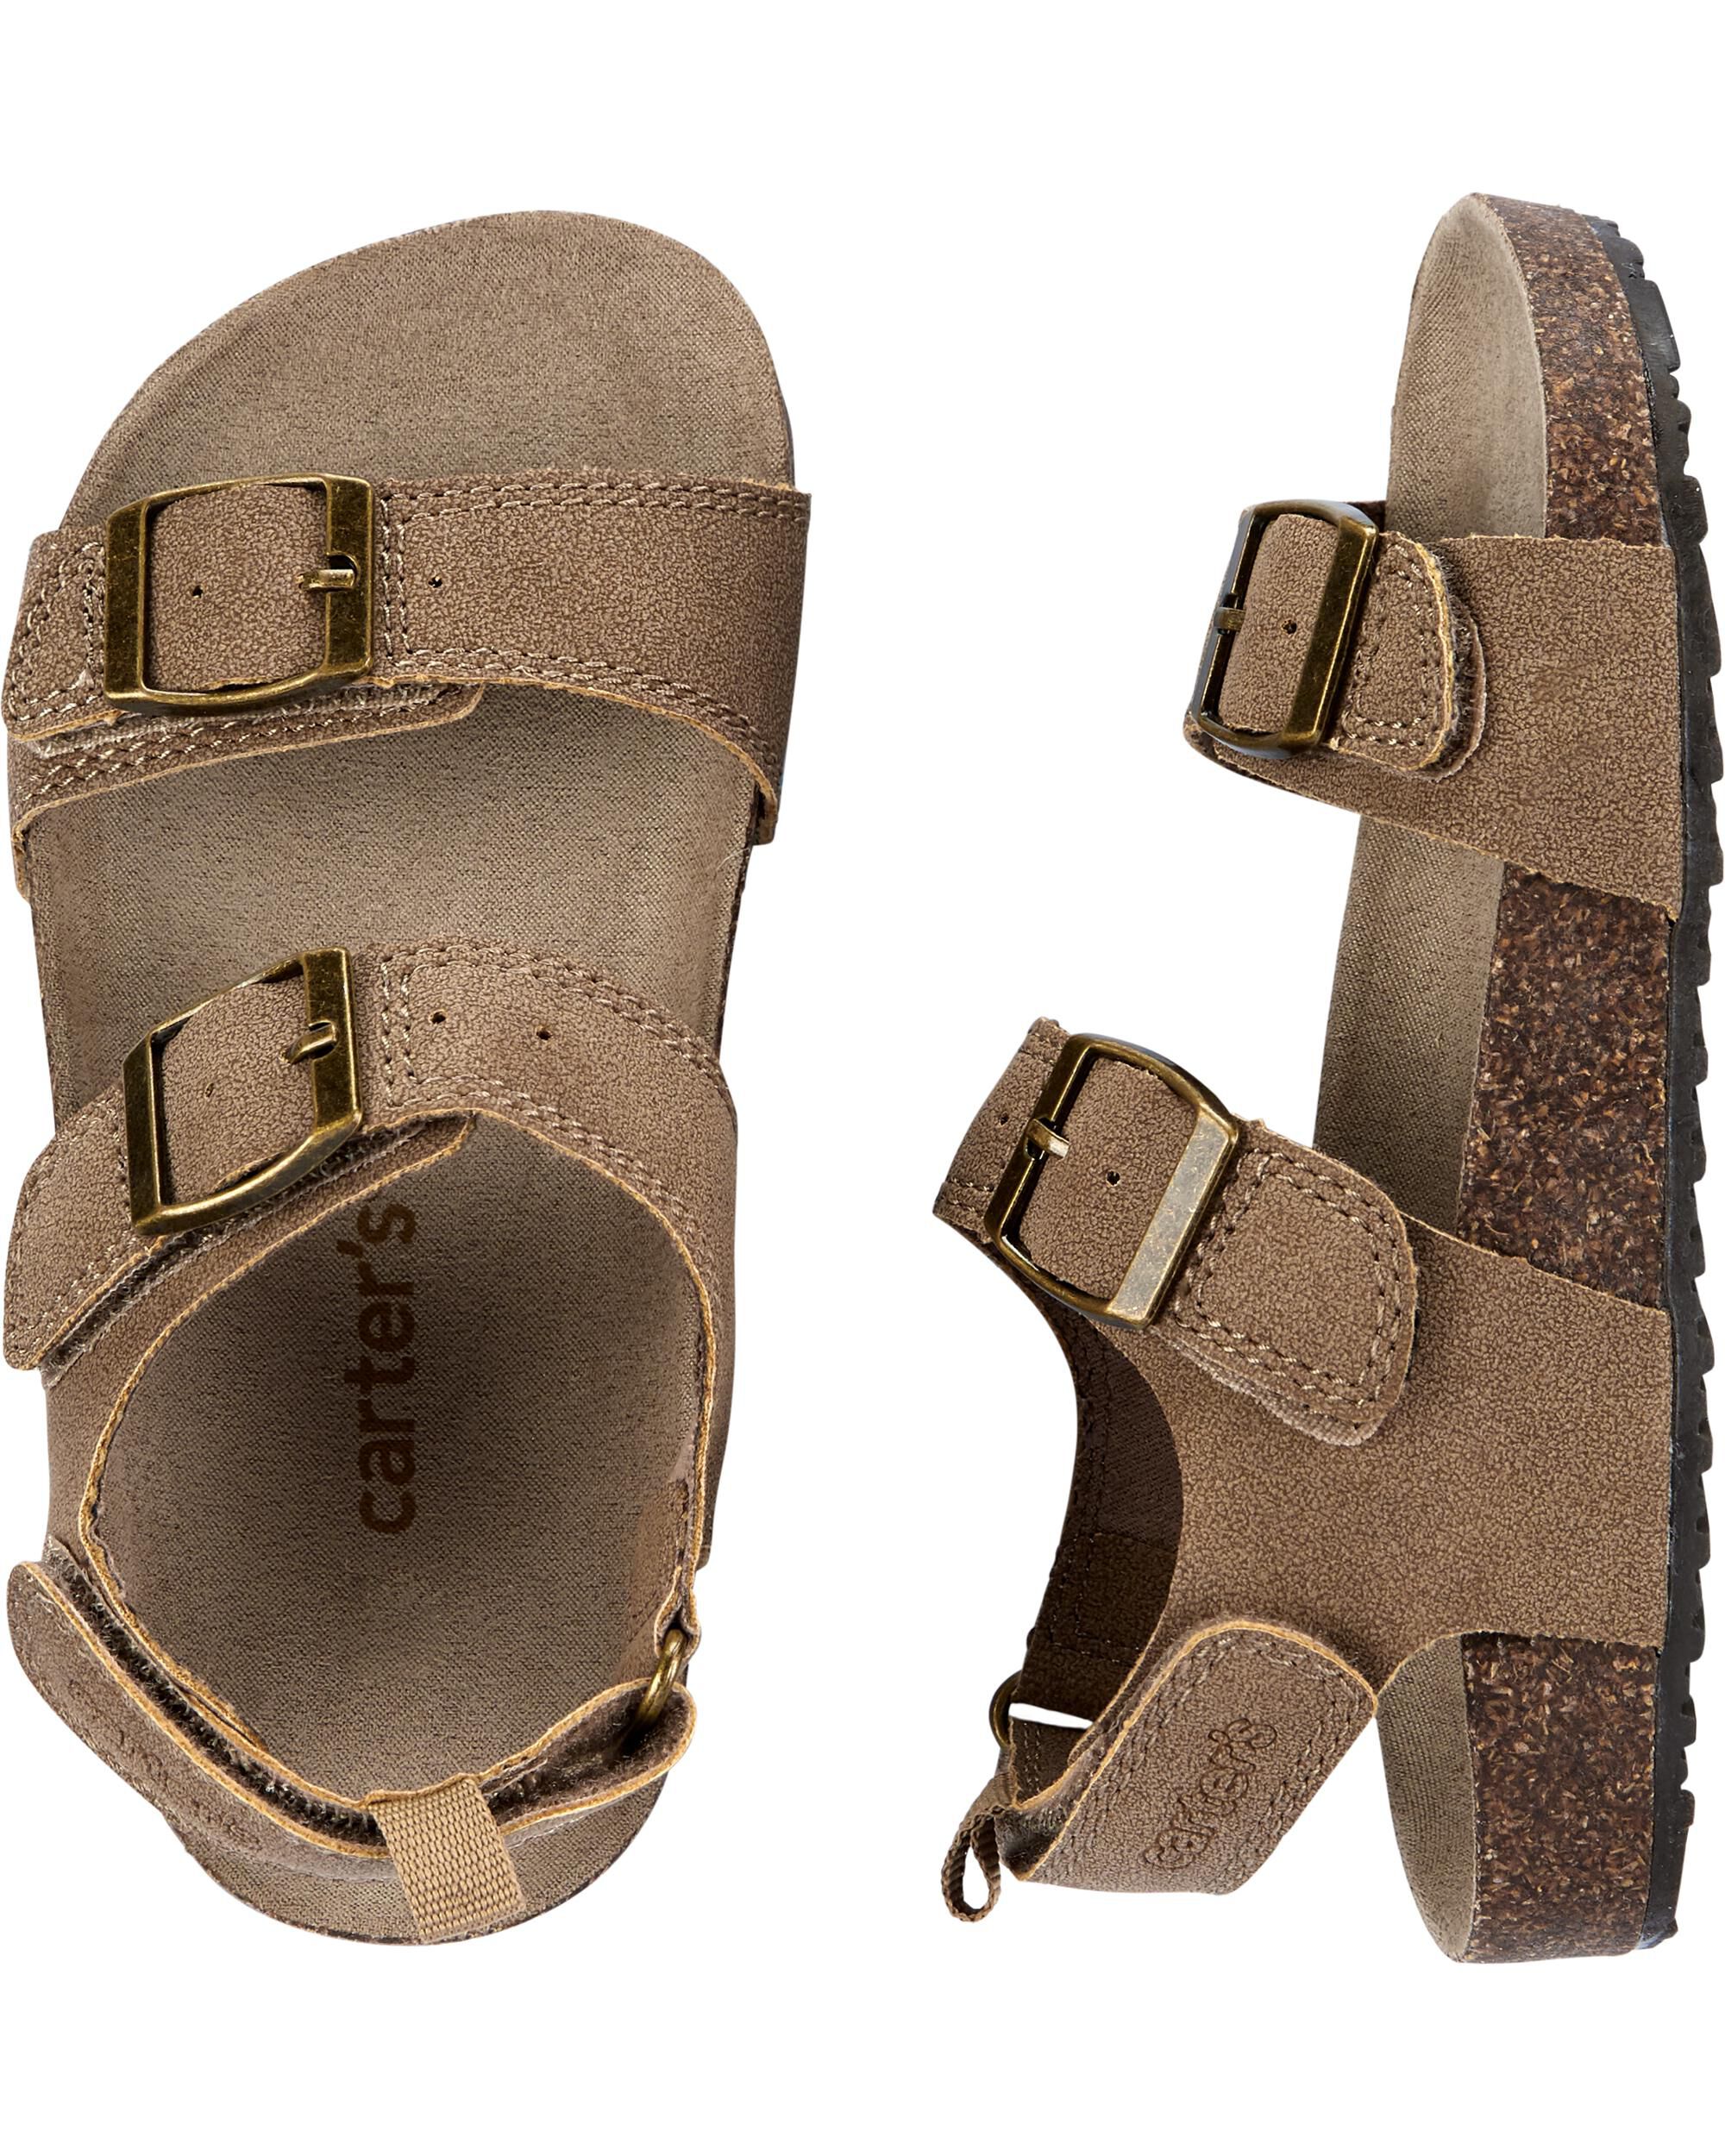 carter's buckle cork sandals